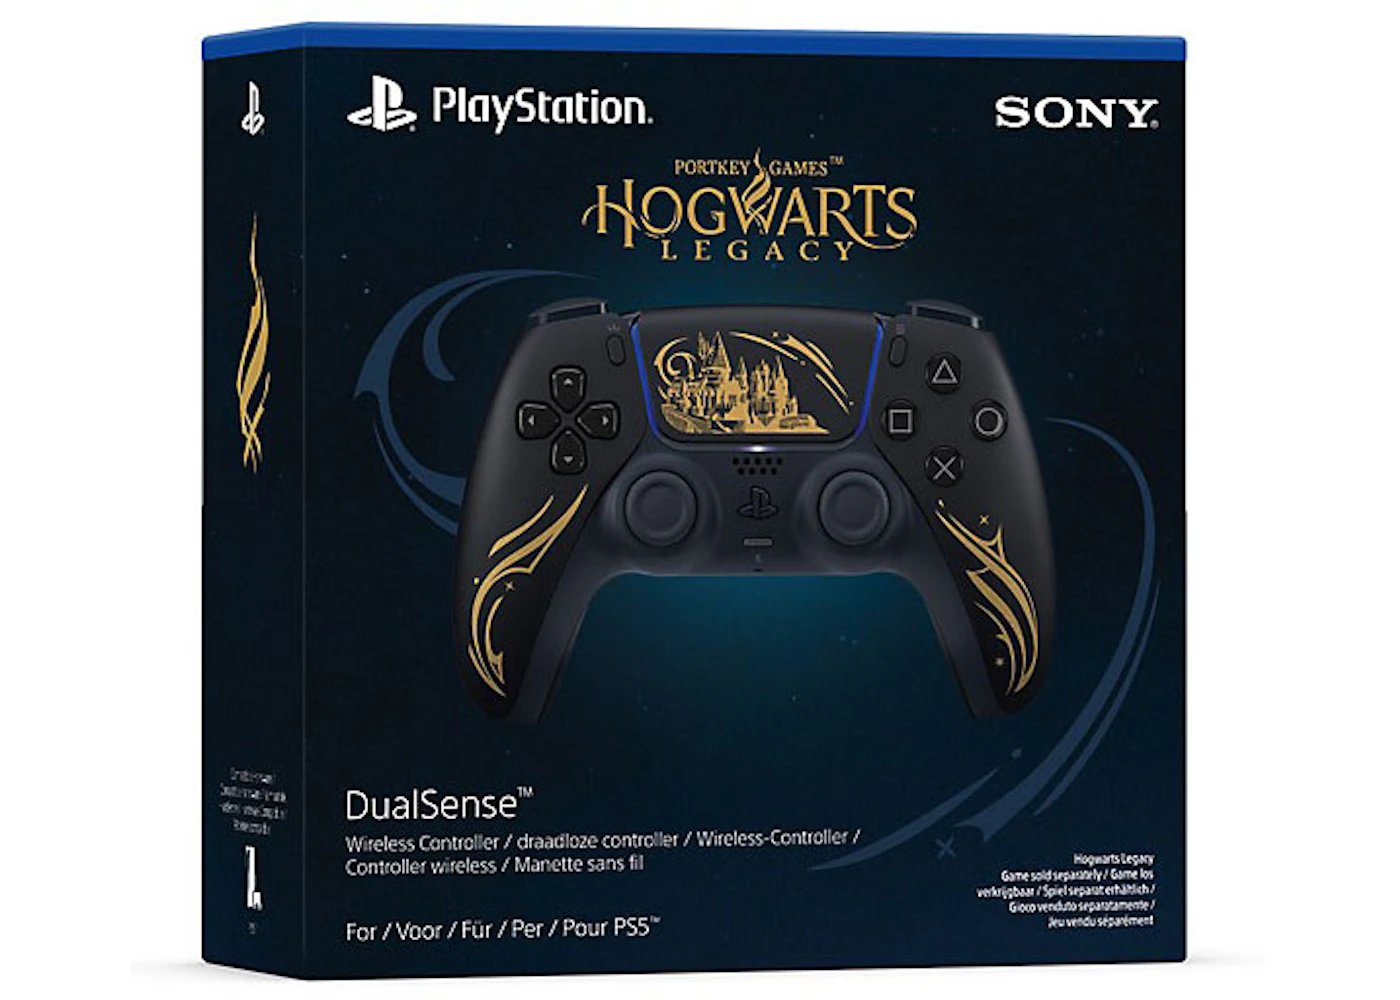 Sony Playstation PS5 DualSense Wireless Controller Hogwarts Legacy